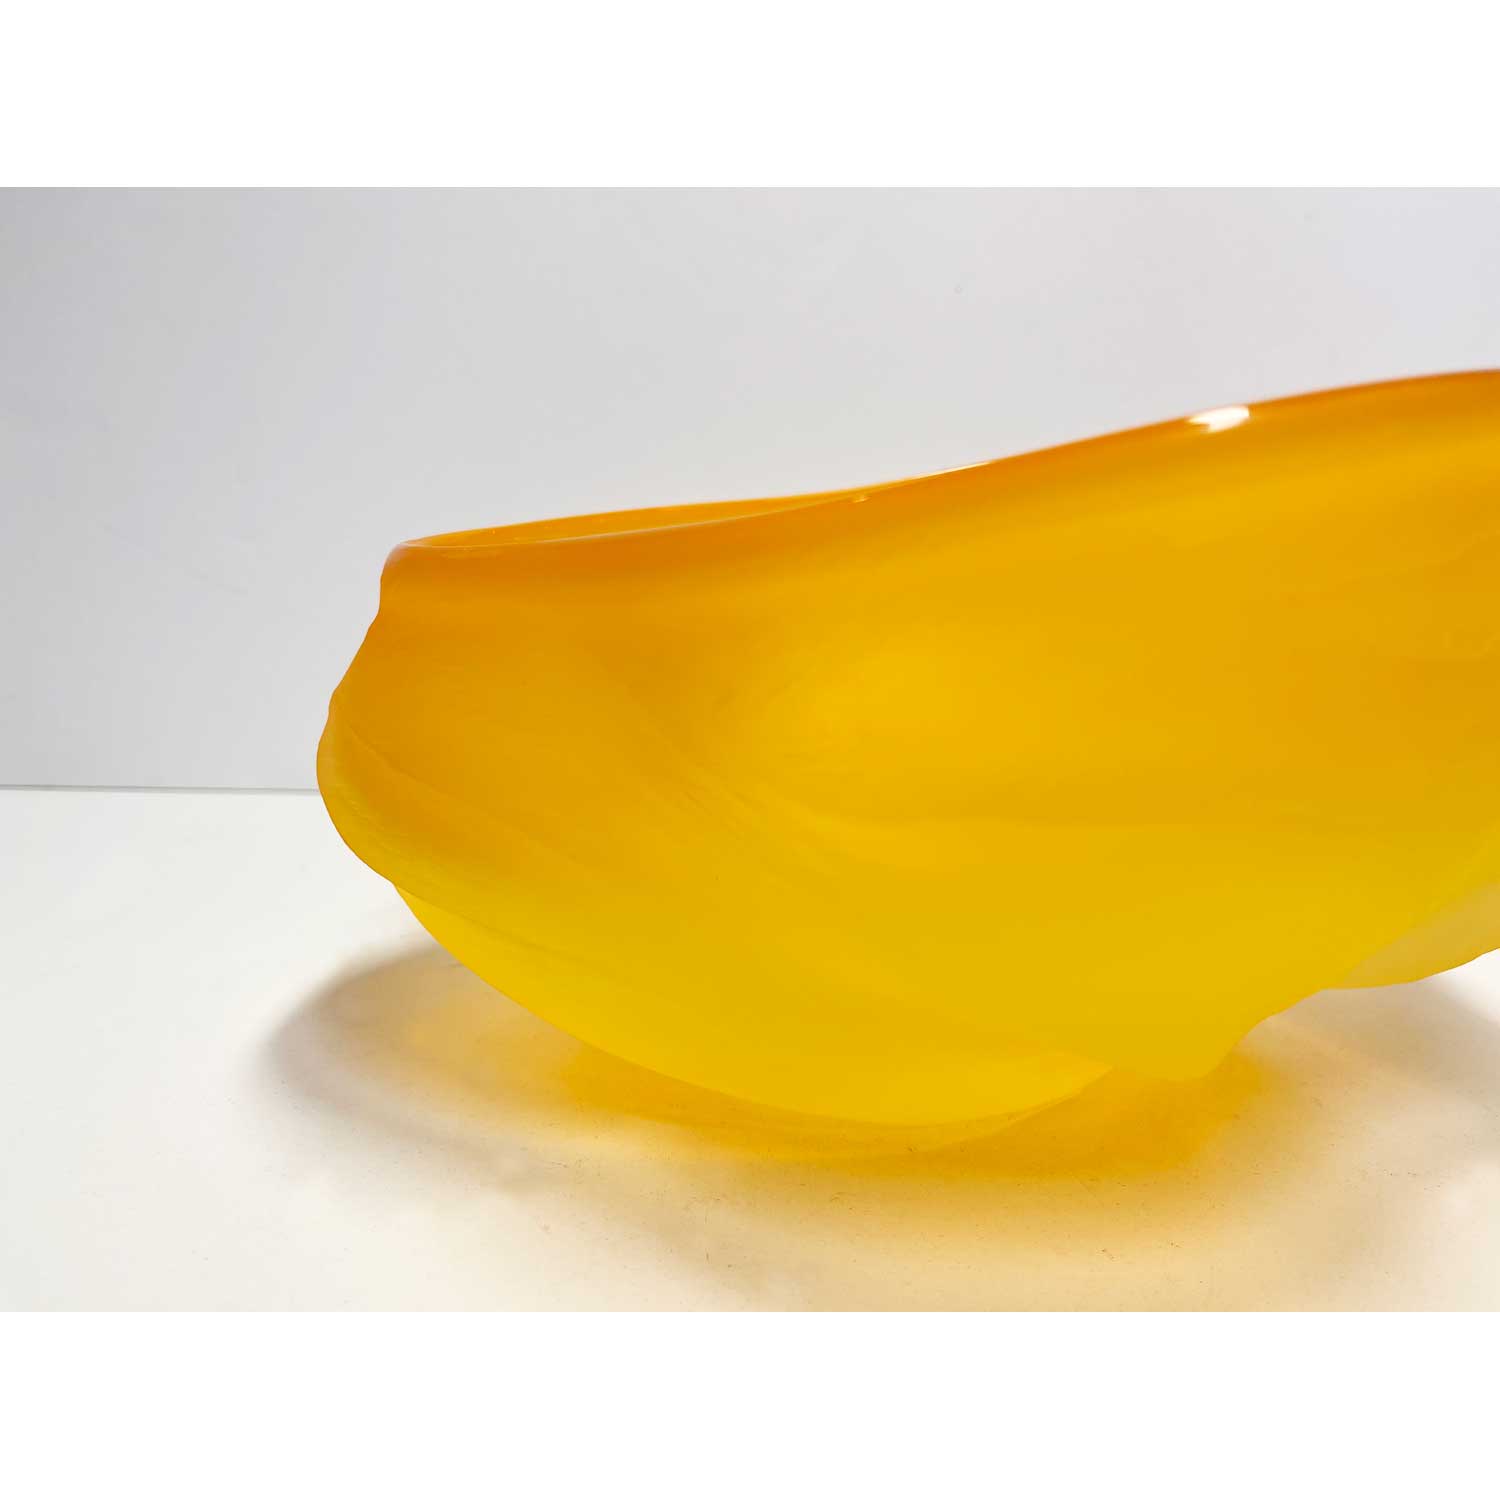 Brad Copping - Brilliant Yellow Undula Bowl, 6" x 10.5" x 9"